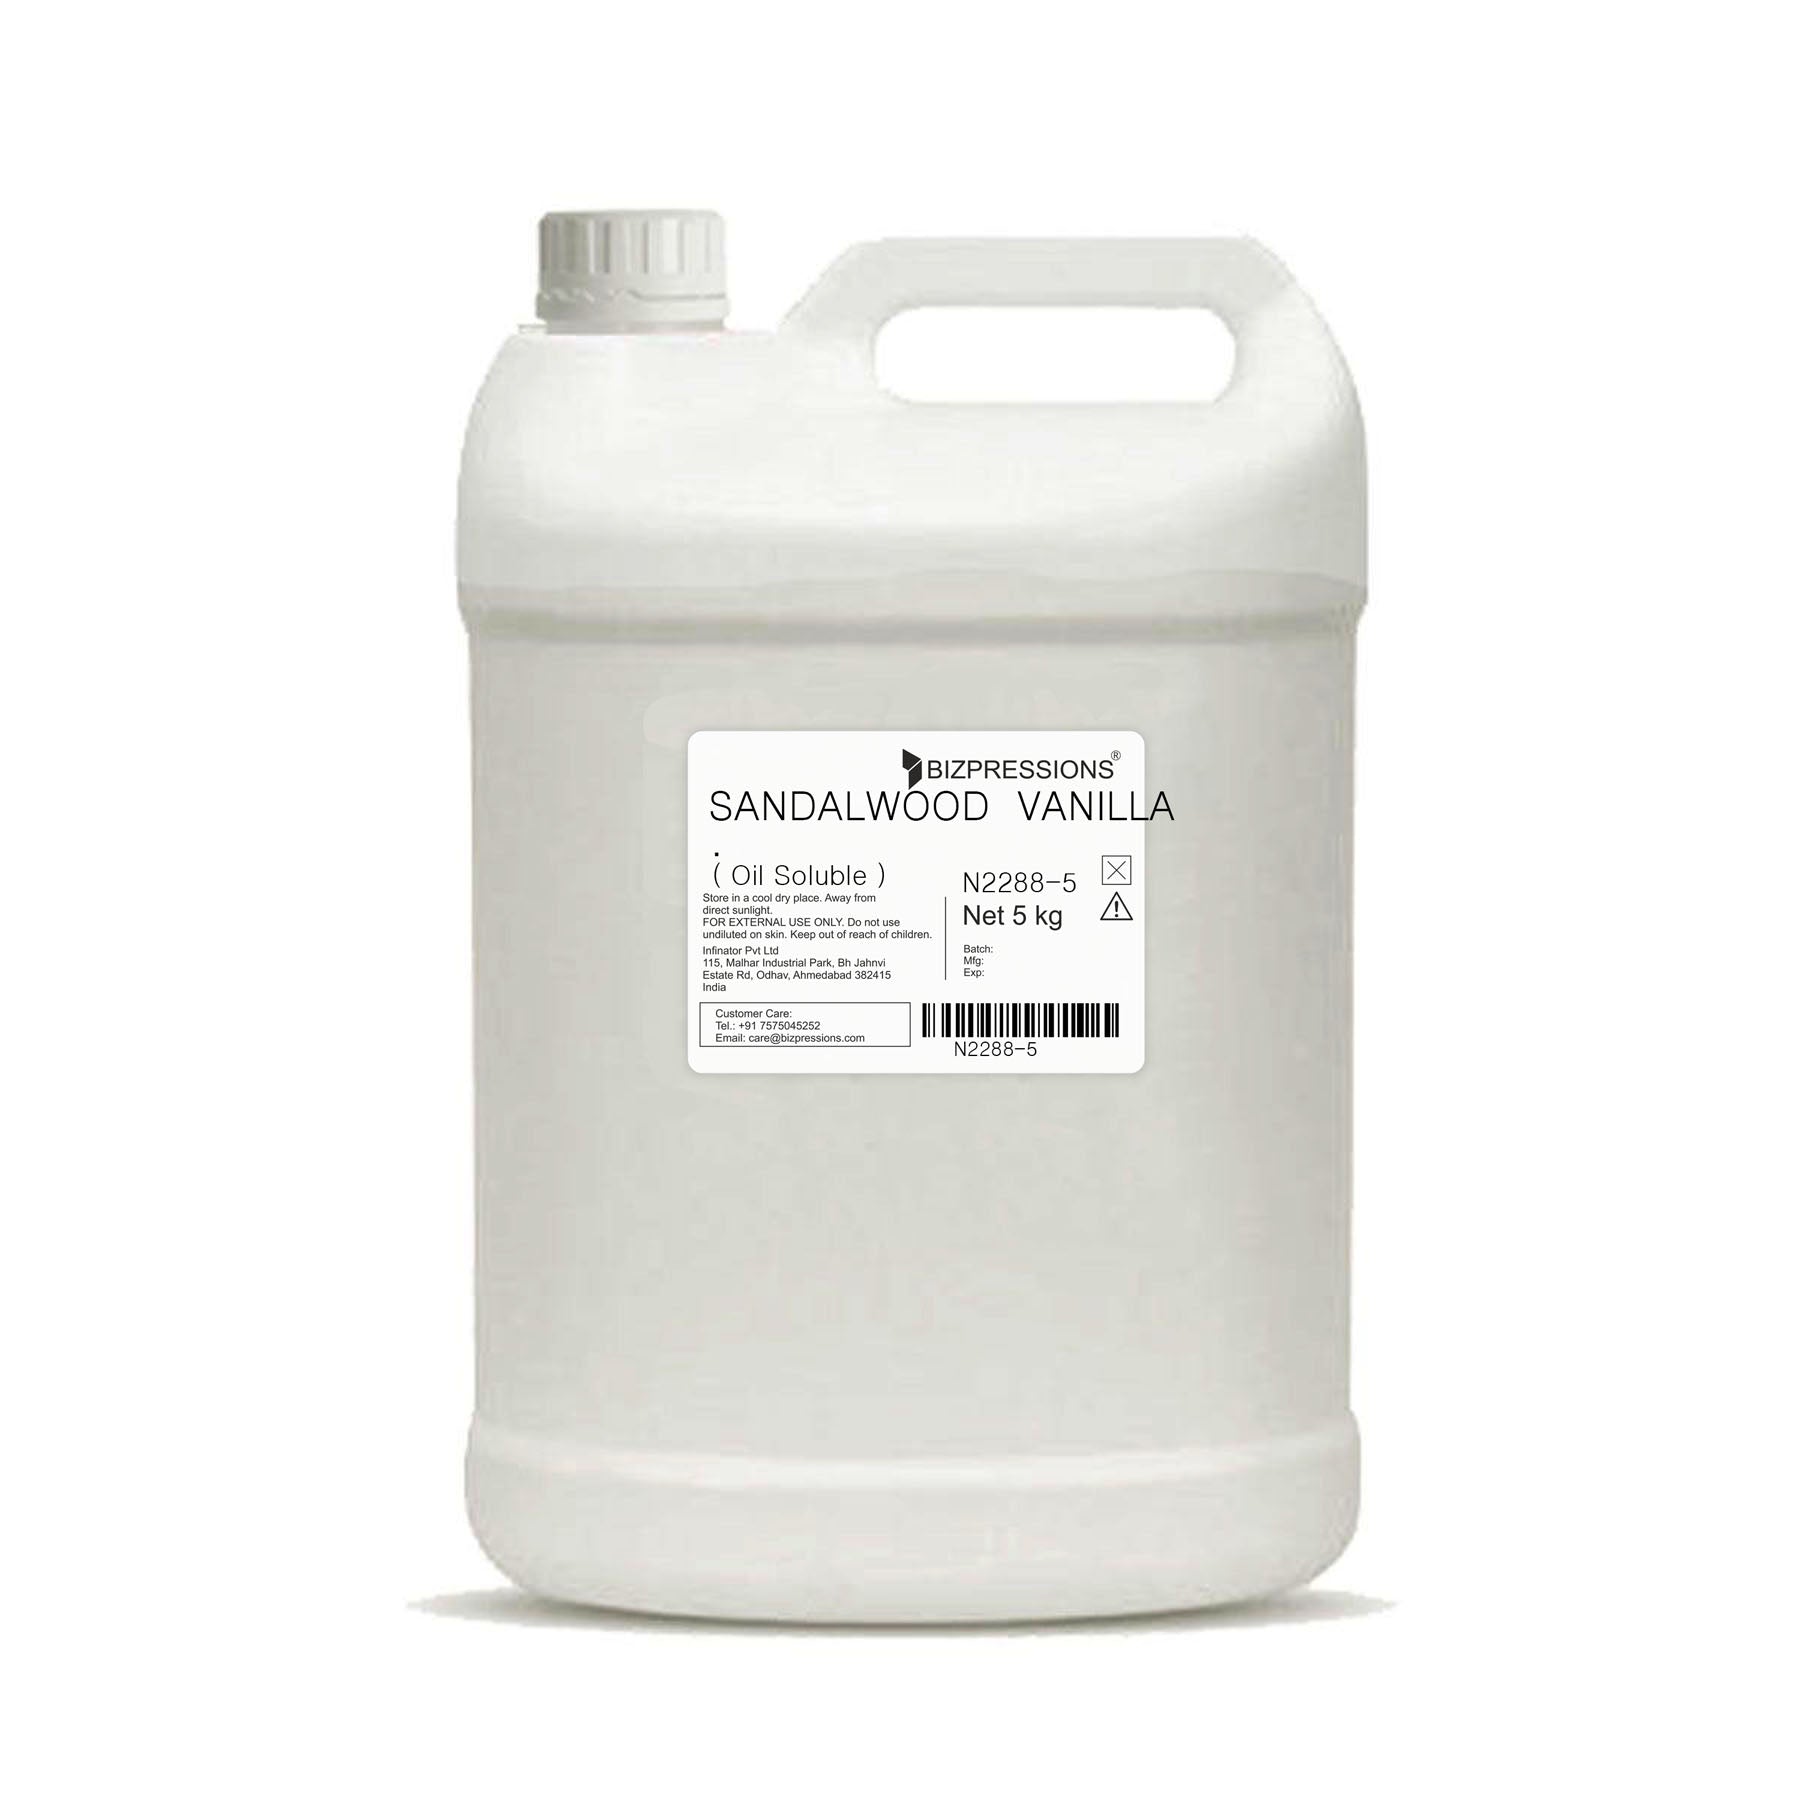 SANDALWOOD VANILLA - Fragrance ( Oil Soluble ) - 5 kg